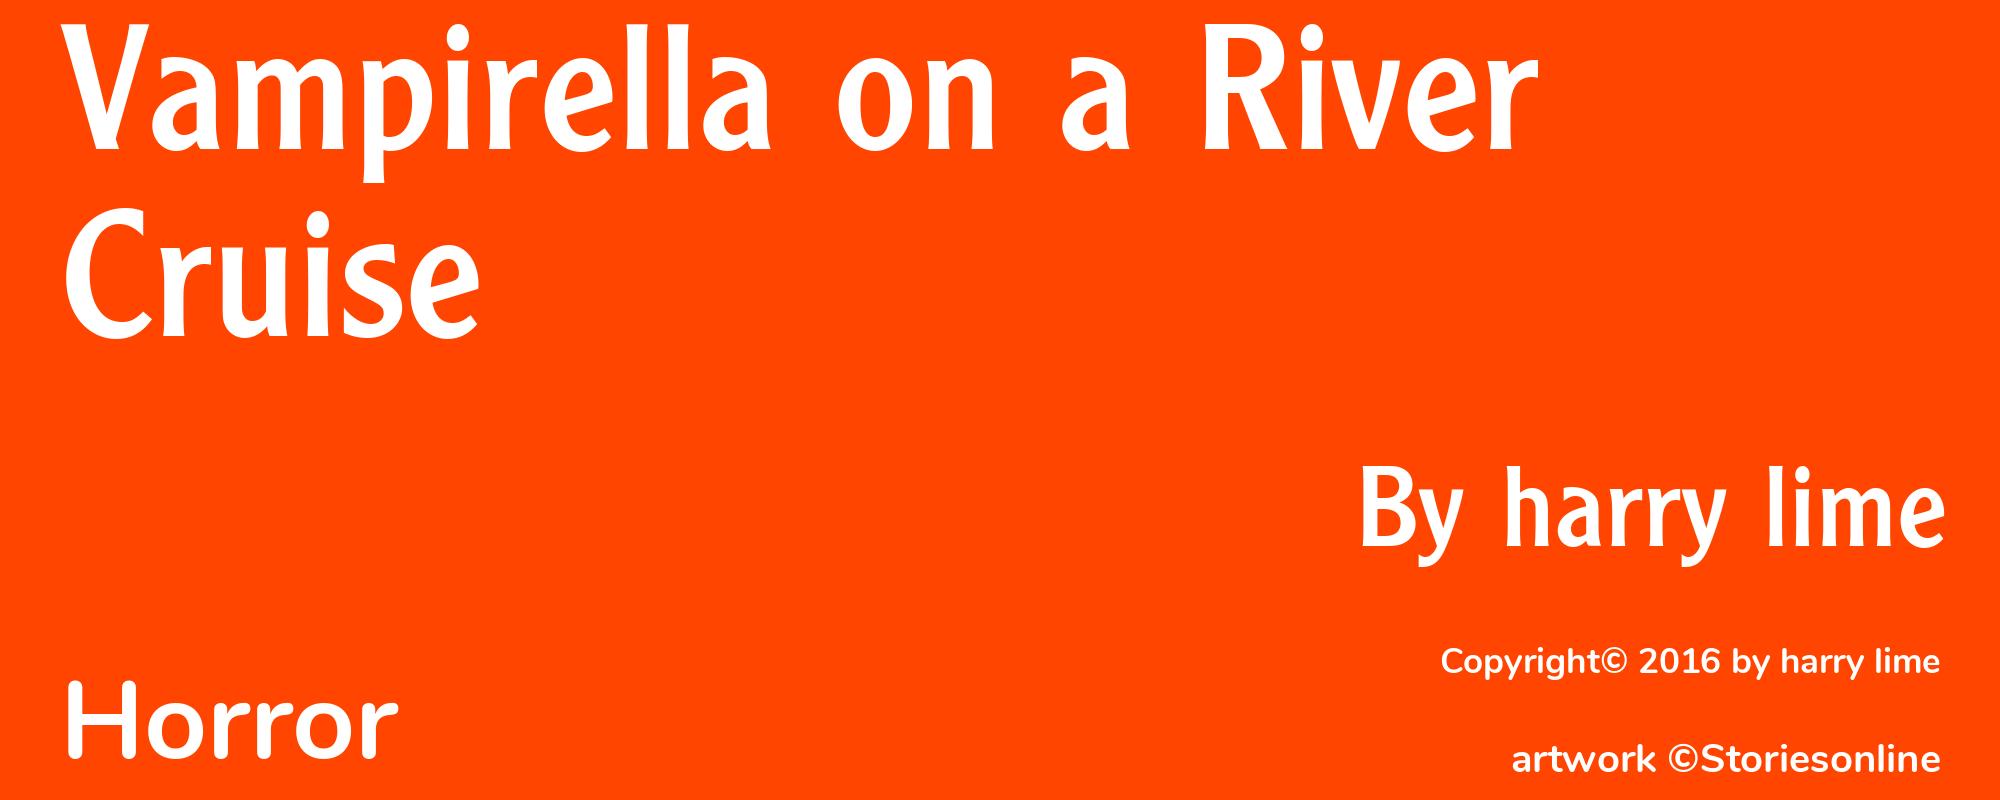 Vampirella on a River Cruise - Cover